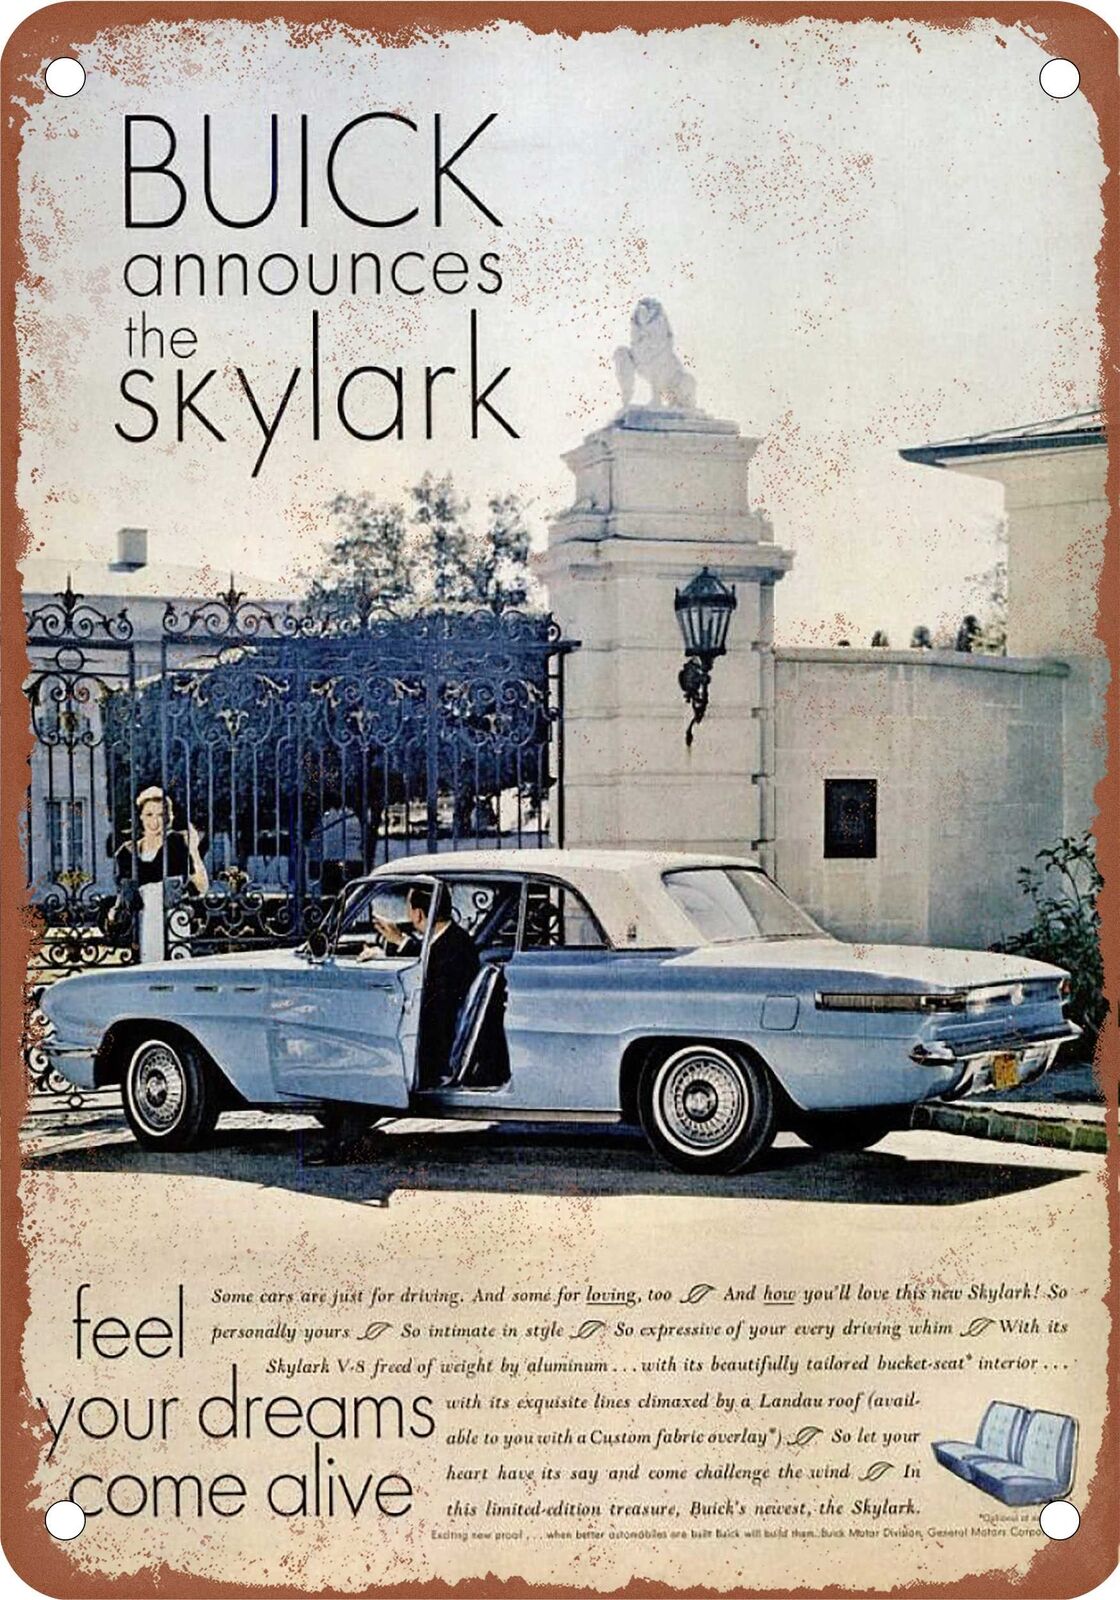 METAL SIGN - 1961 Buick Vintage Ad 05 - Old Retro Rusty Look